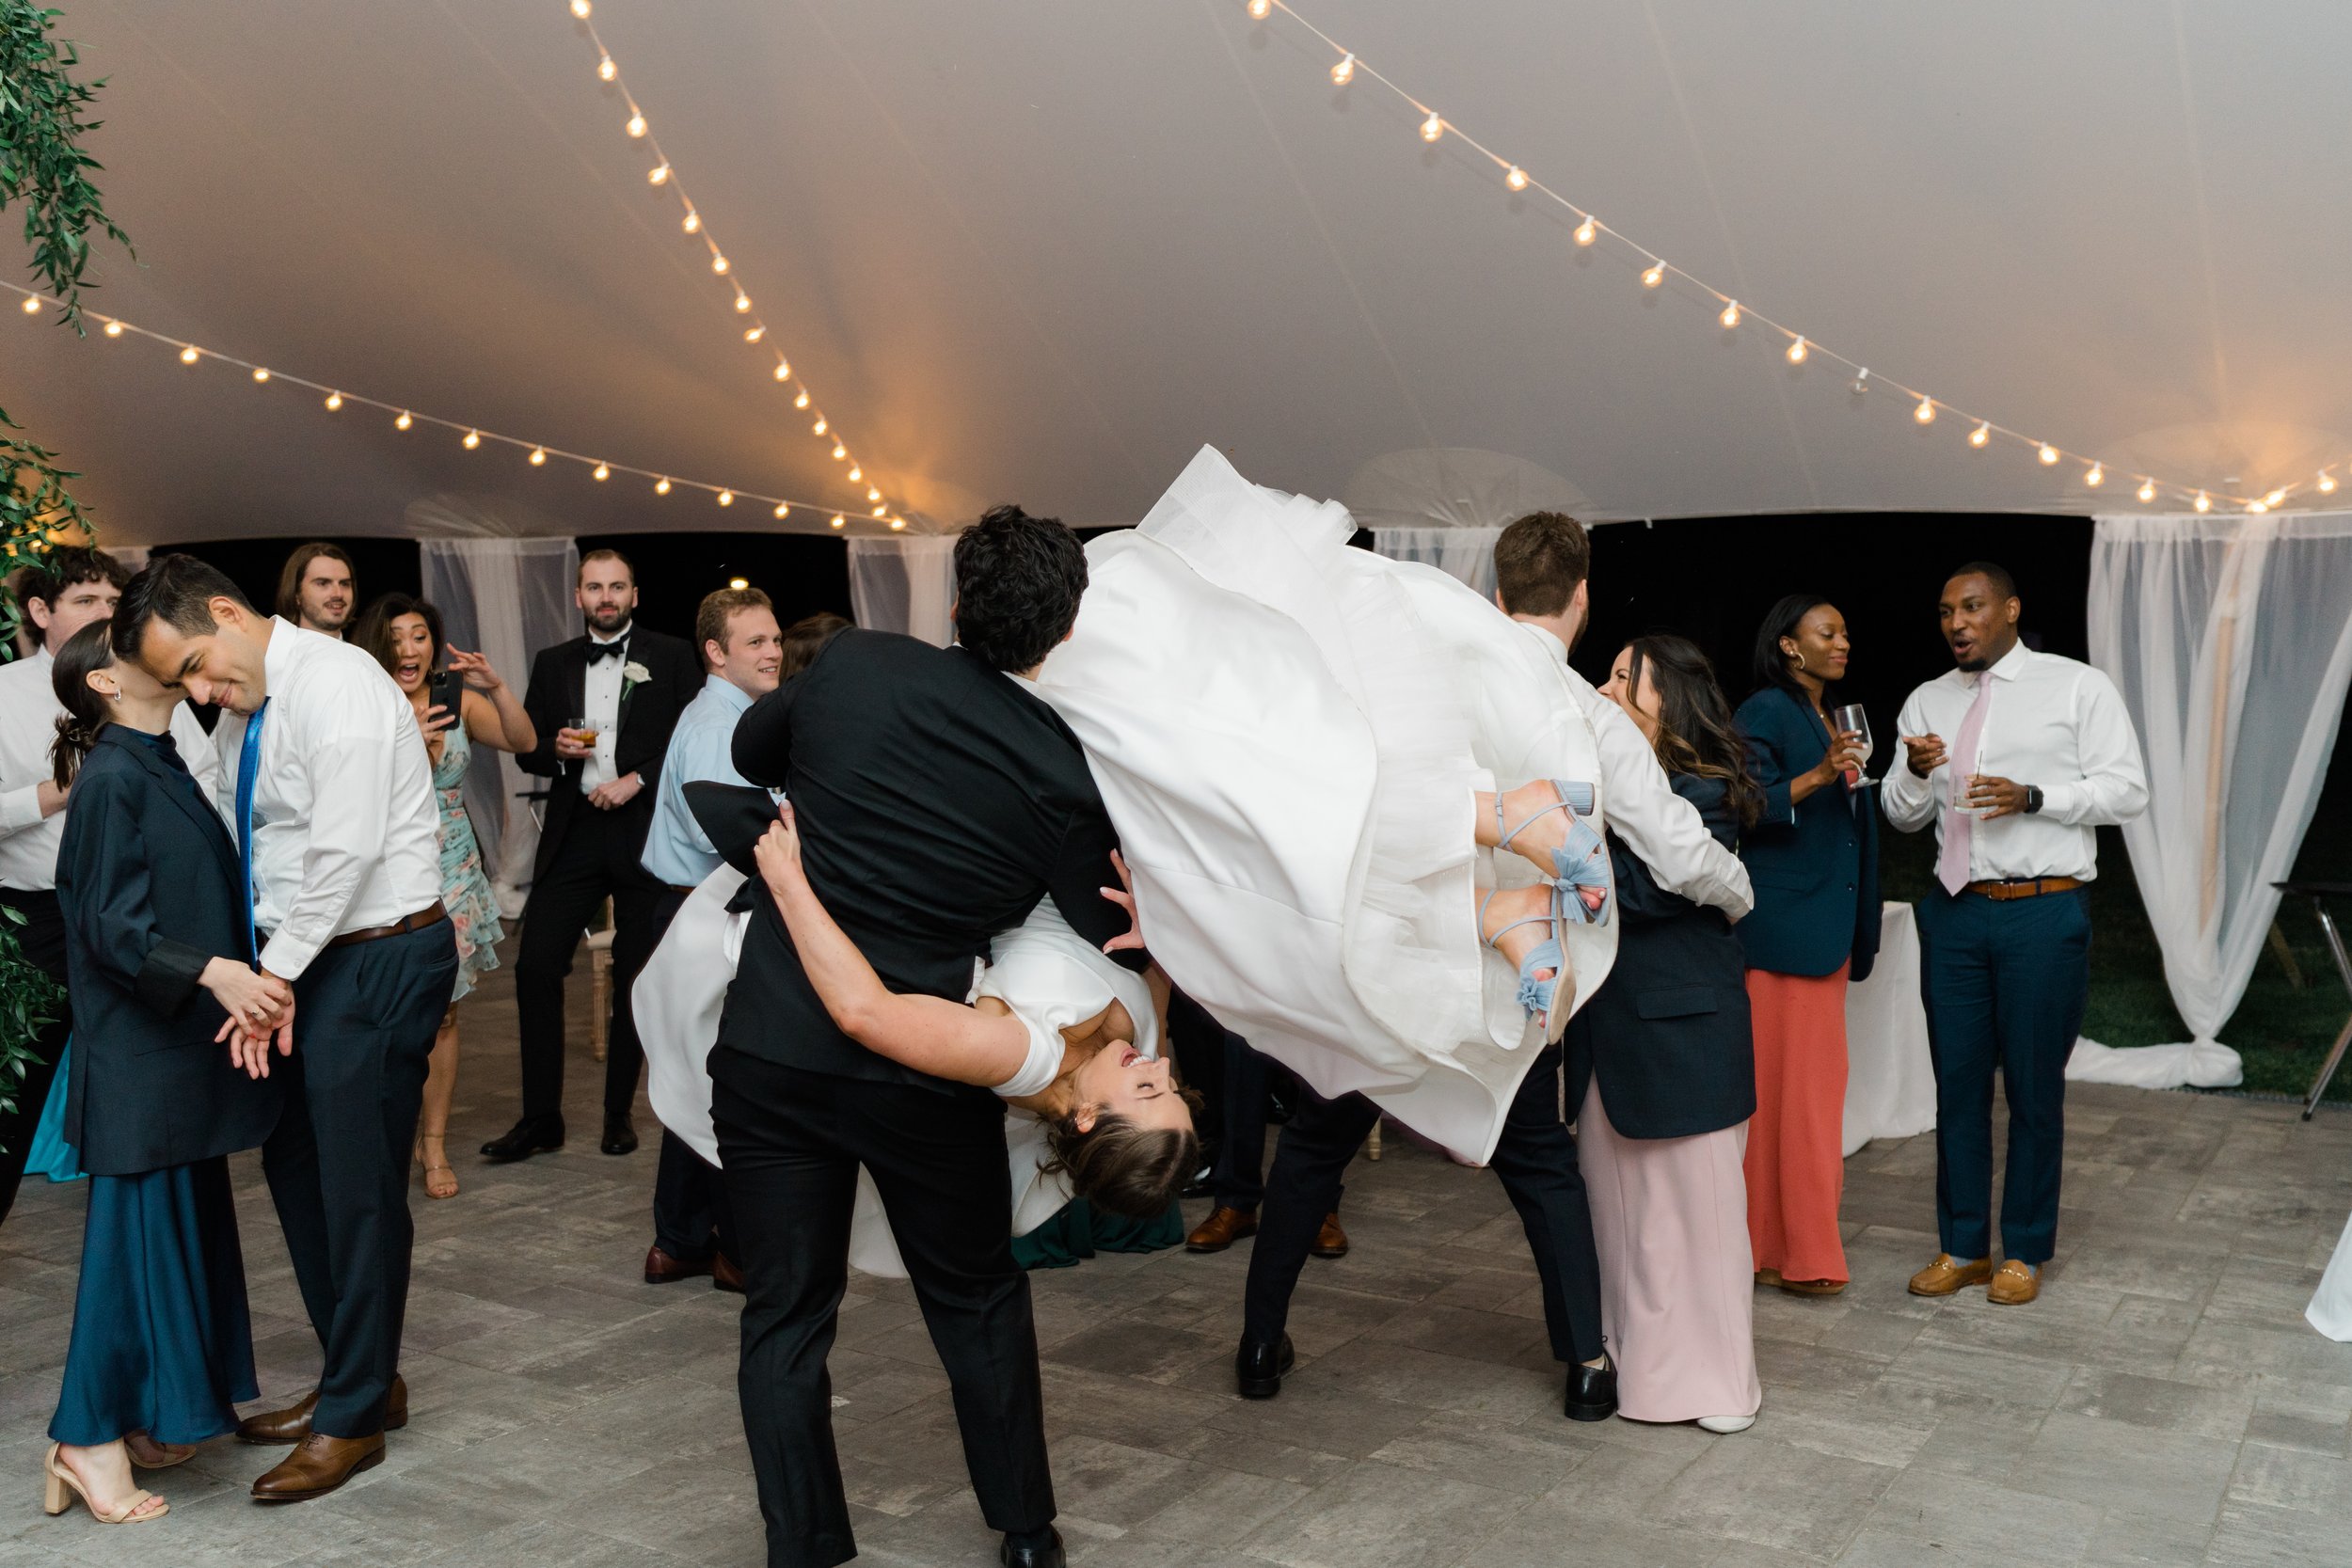 Wedding guest flips bride unexpectedly during dance at outdoor wedding reception in Boston. showing off blue randall loeffler heels.